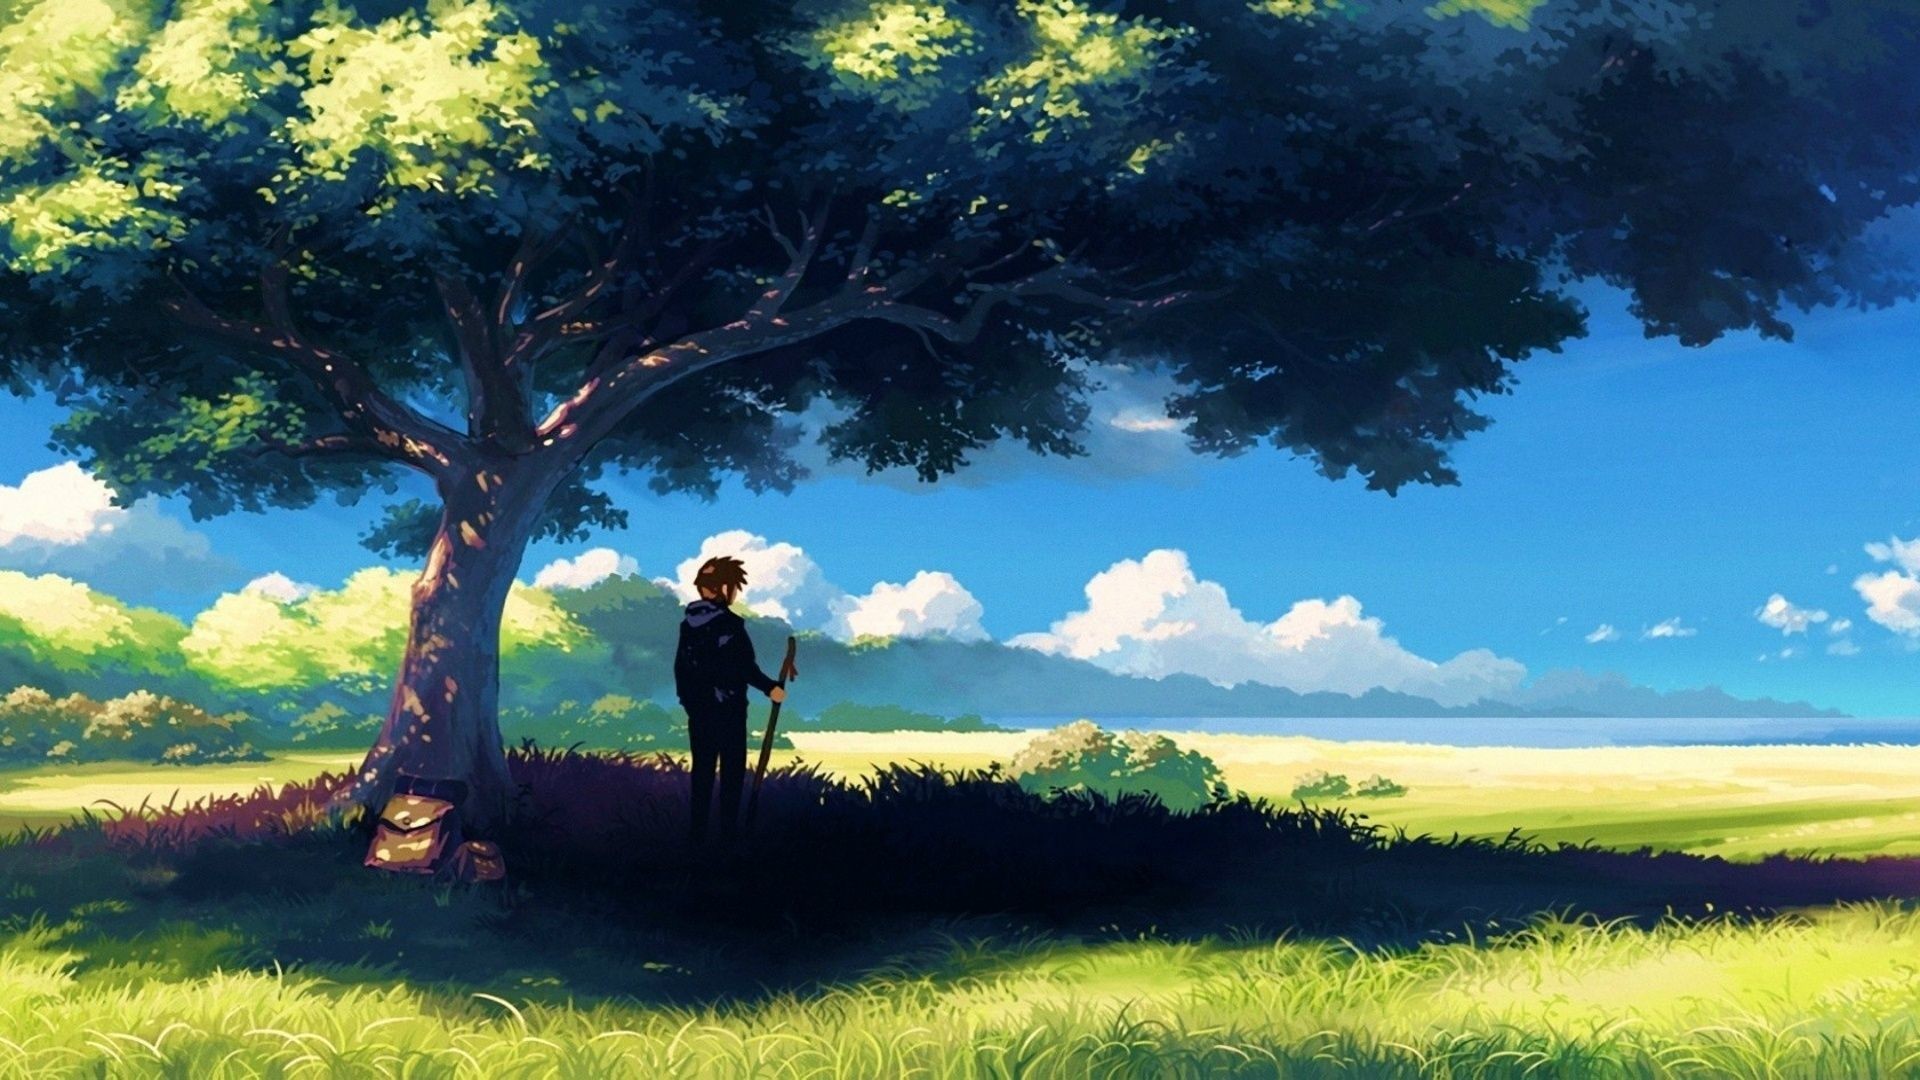 Anime Scenery Wallpaper